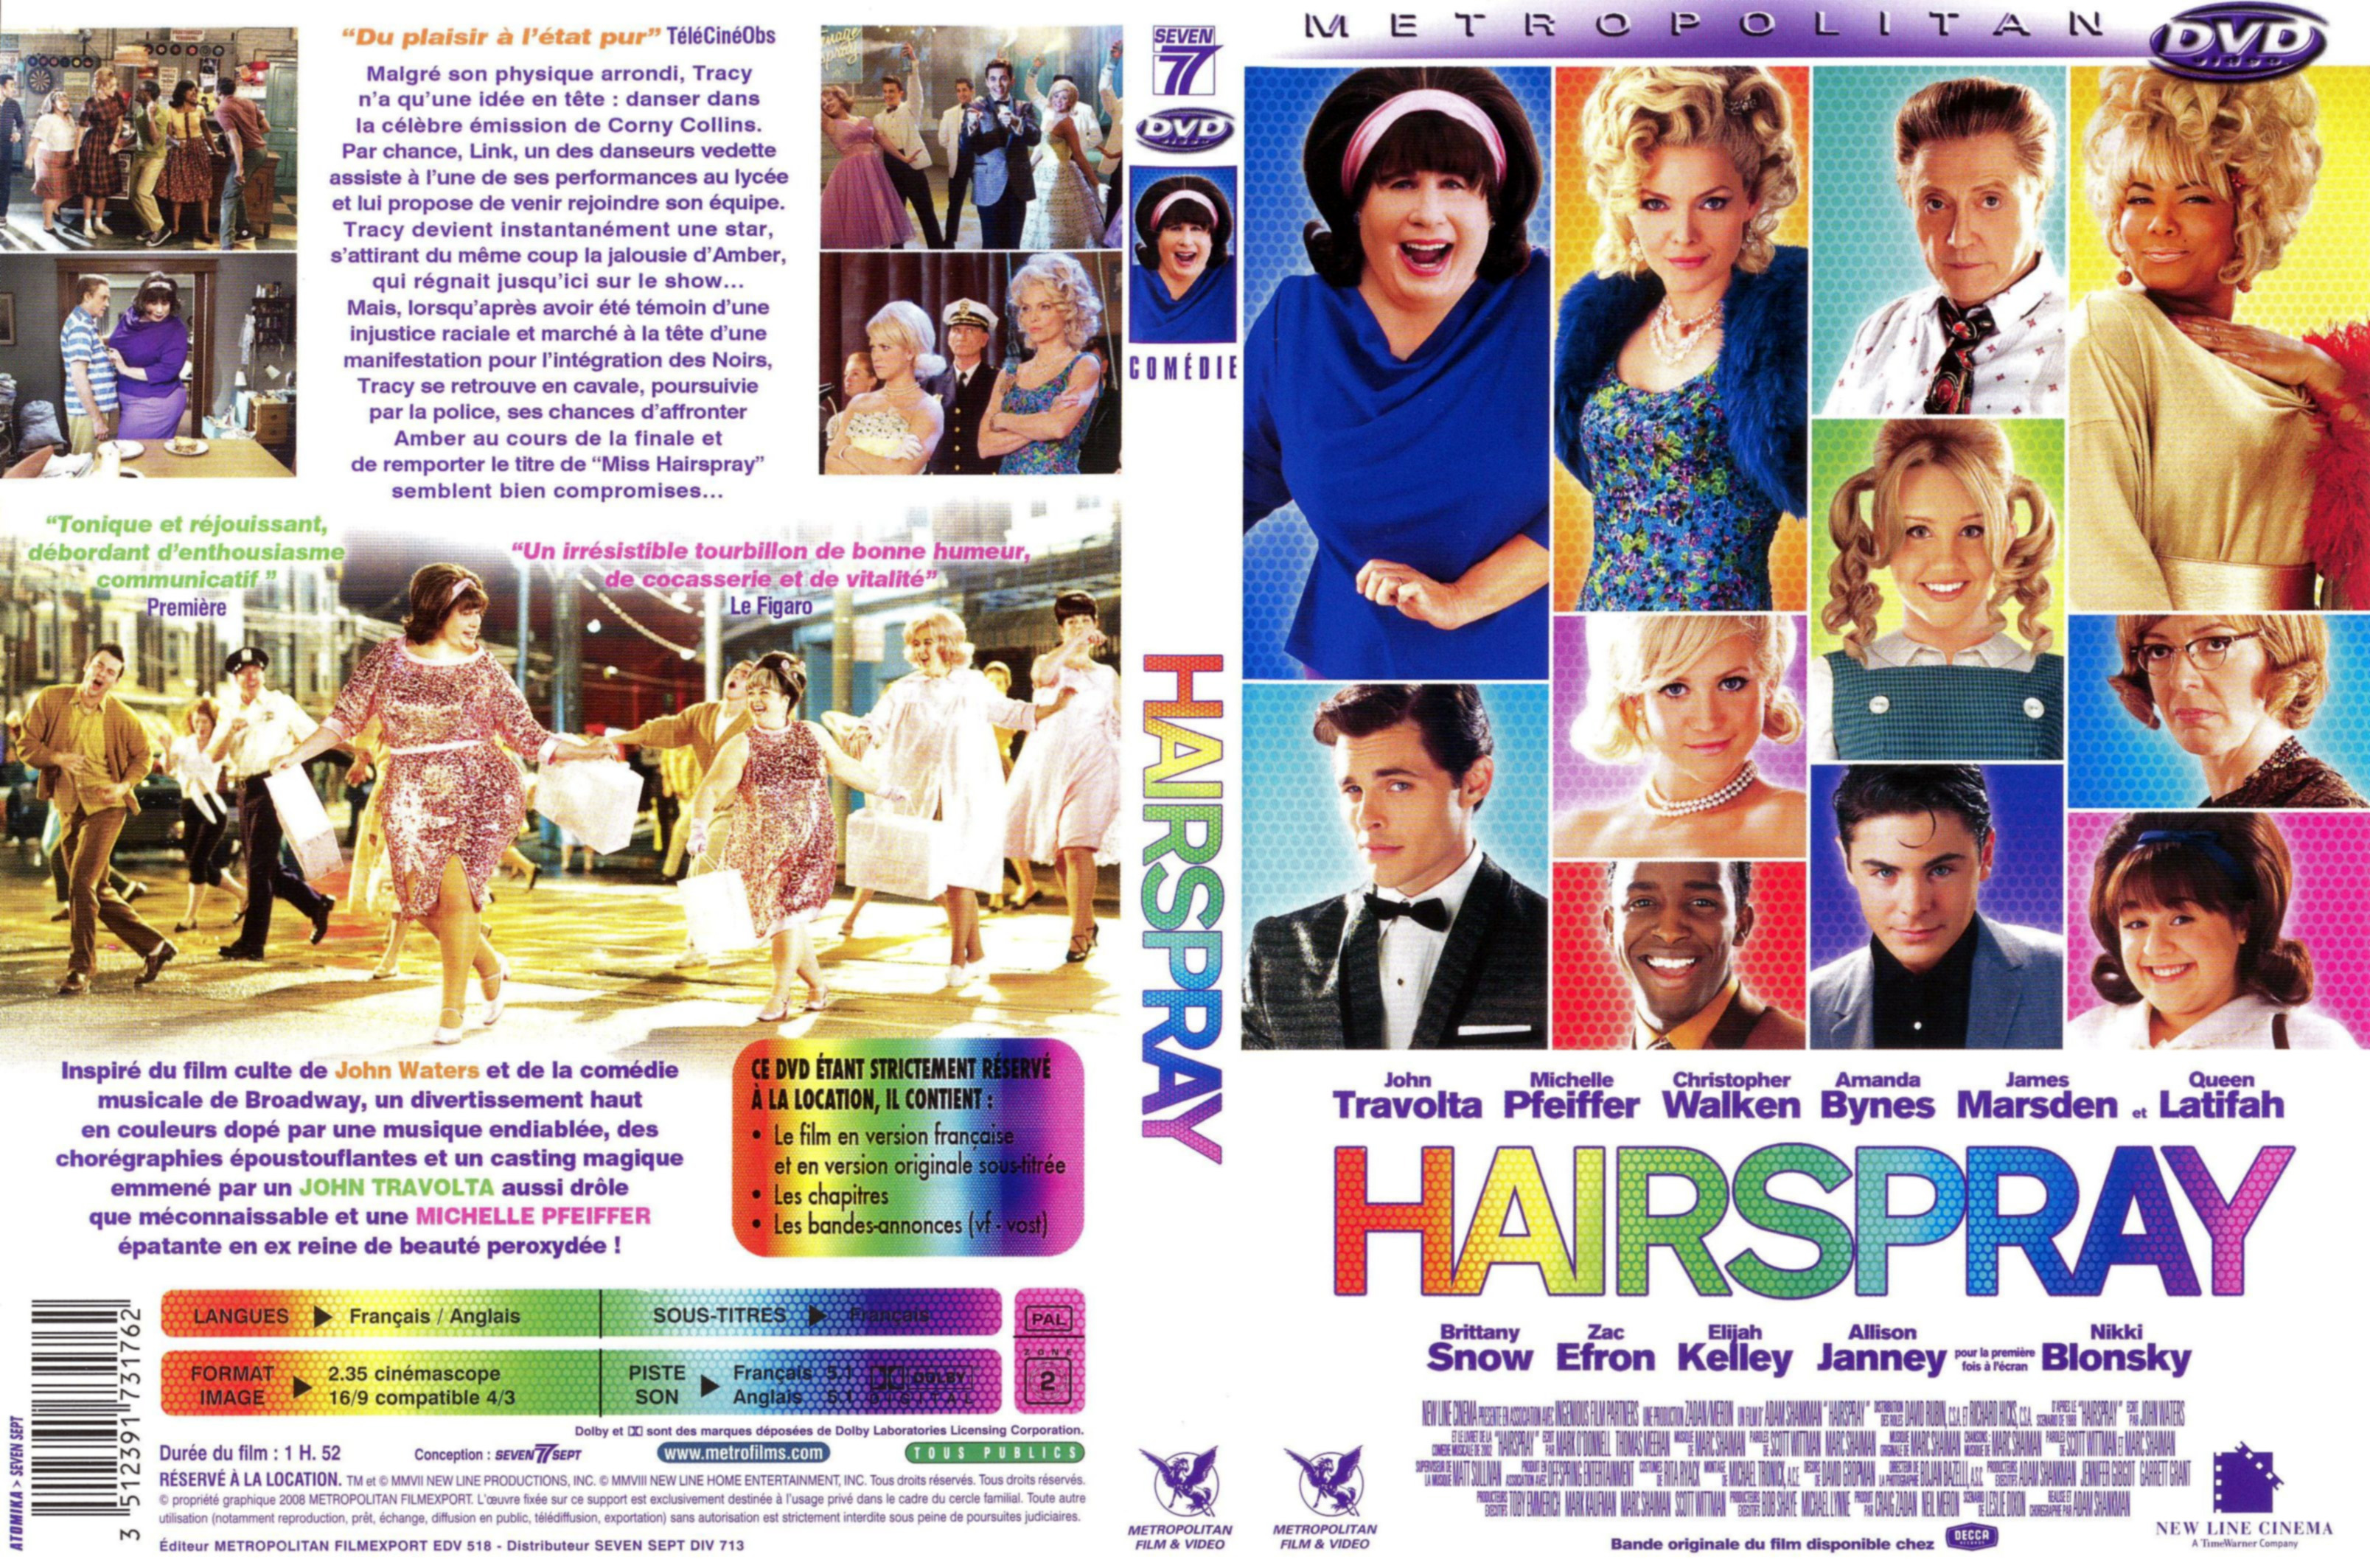 Jaquette DVD Hairspray